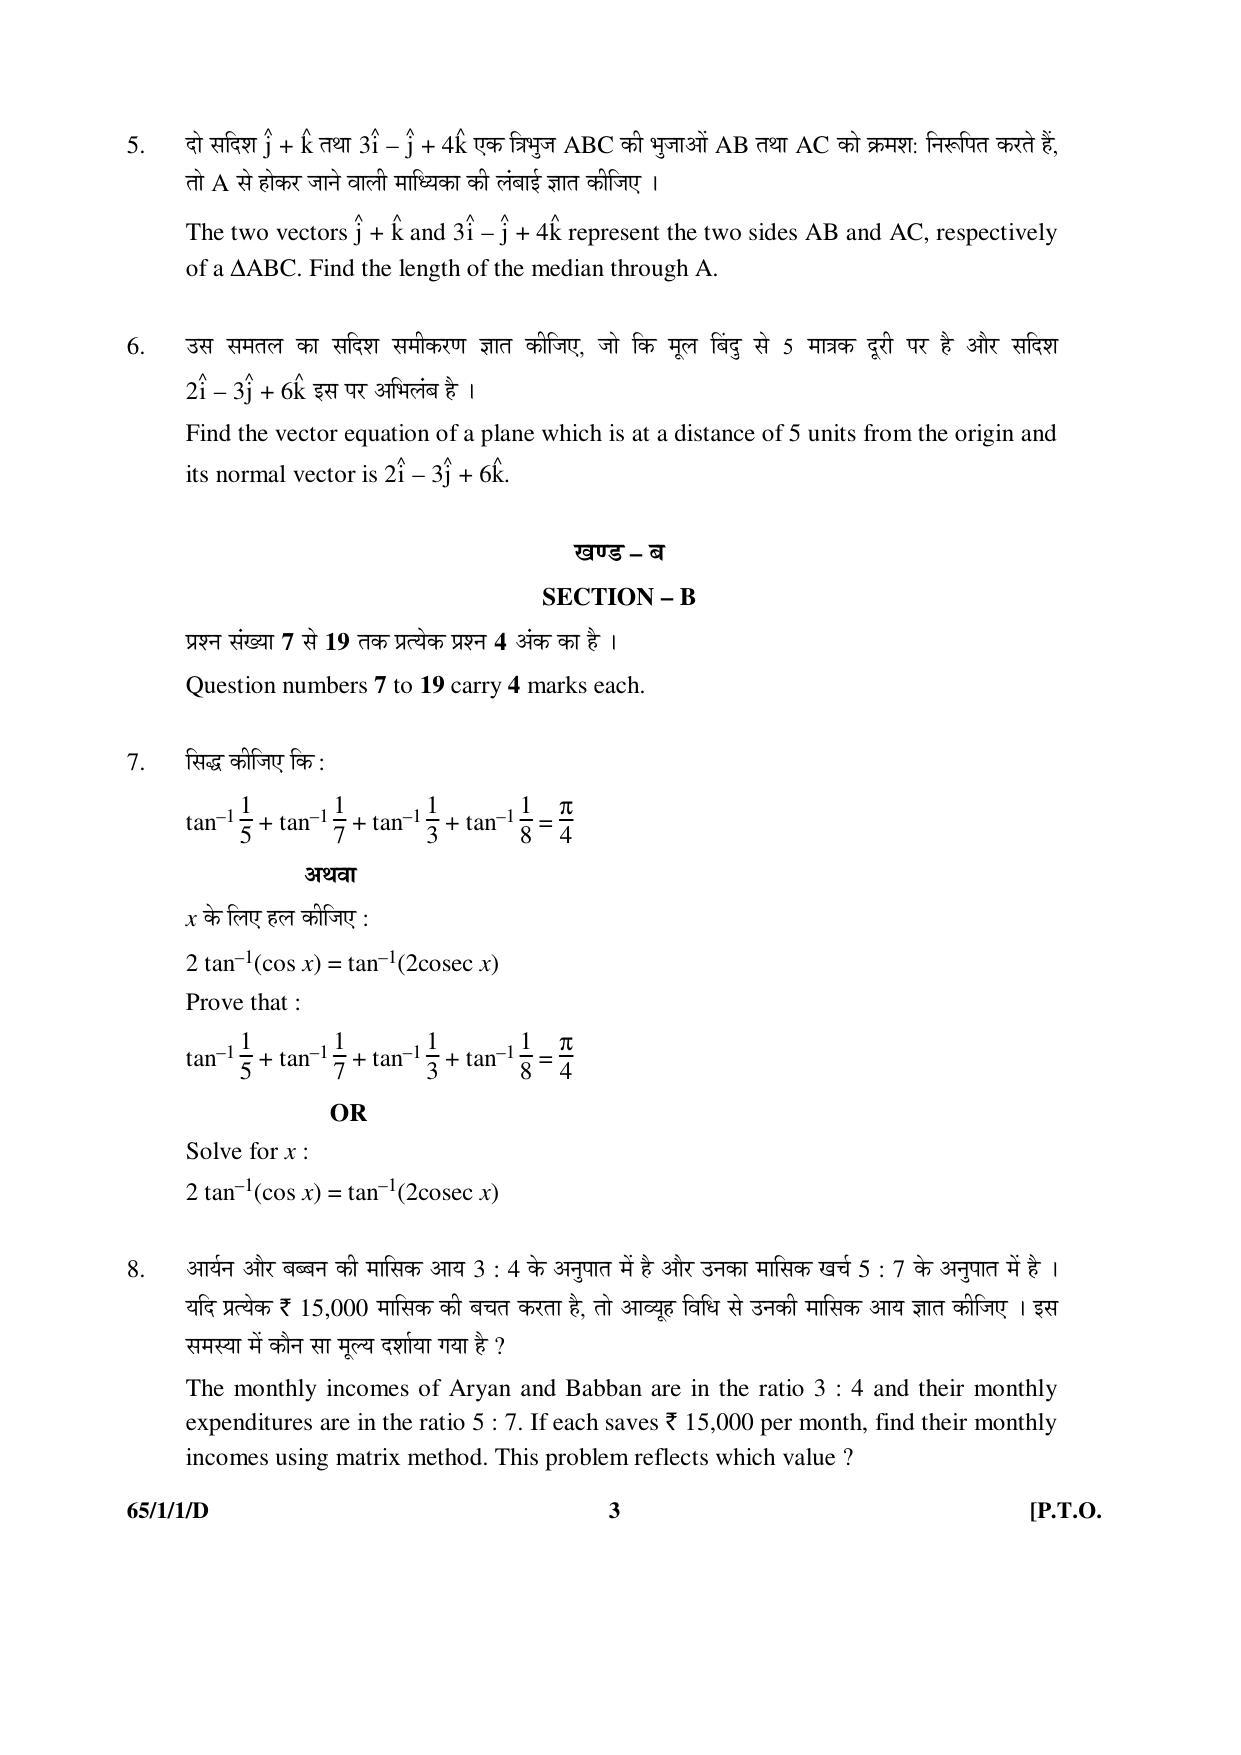 CBSE Class 12 65-1-1-D MATHEMATICS 2016 Question Paper - Page 3